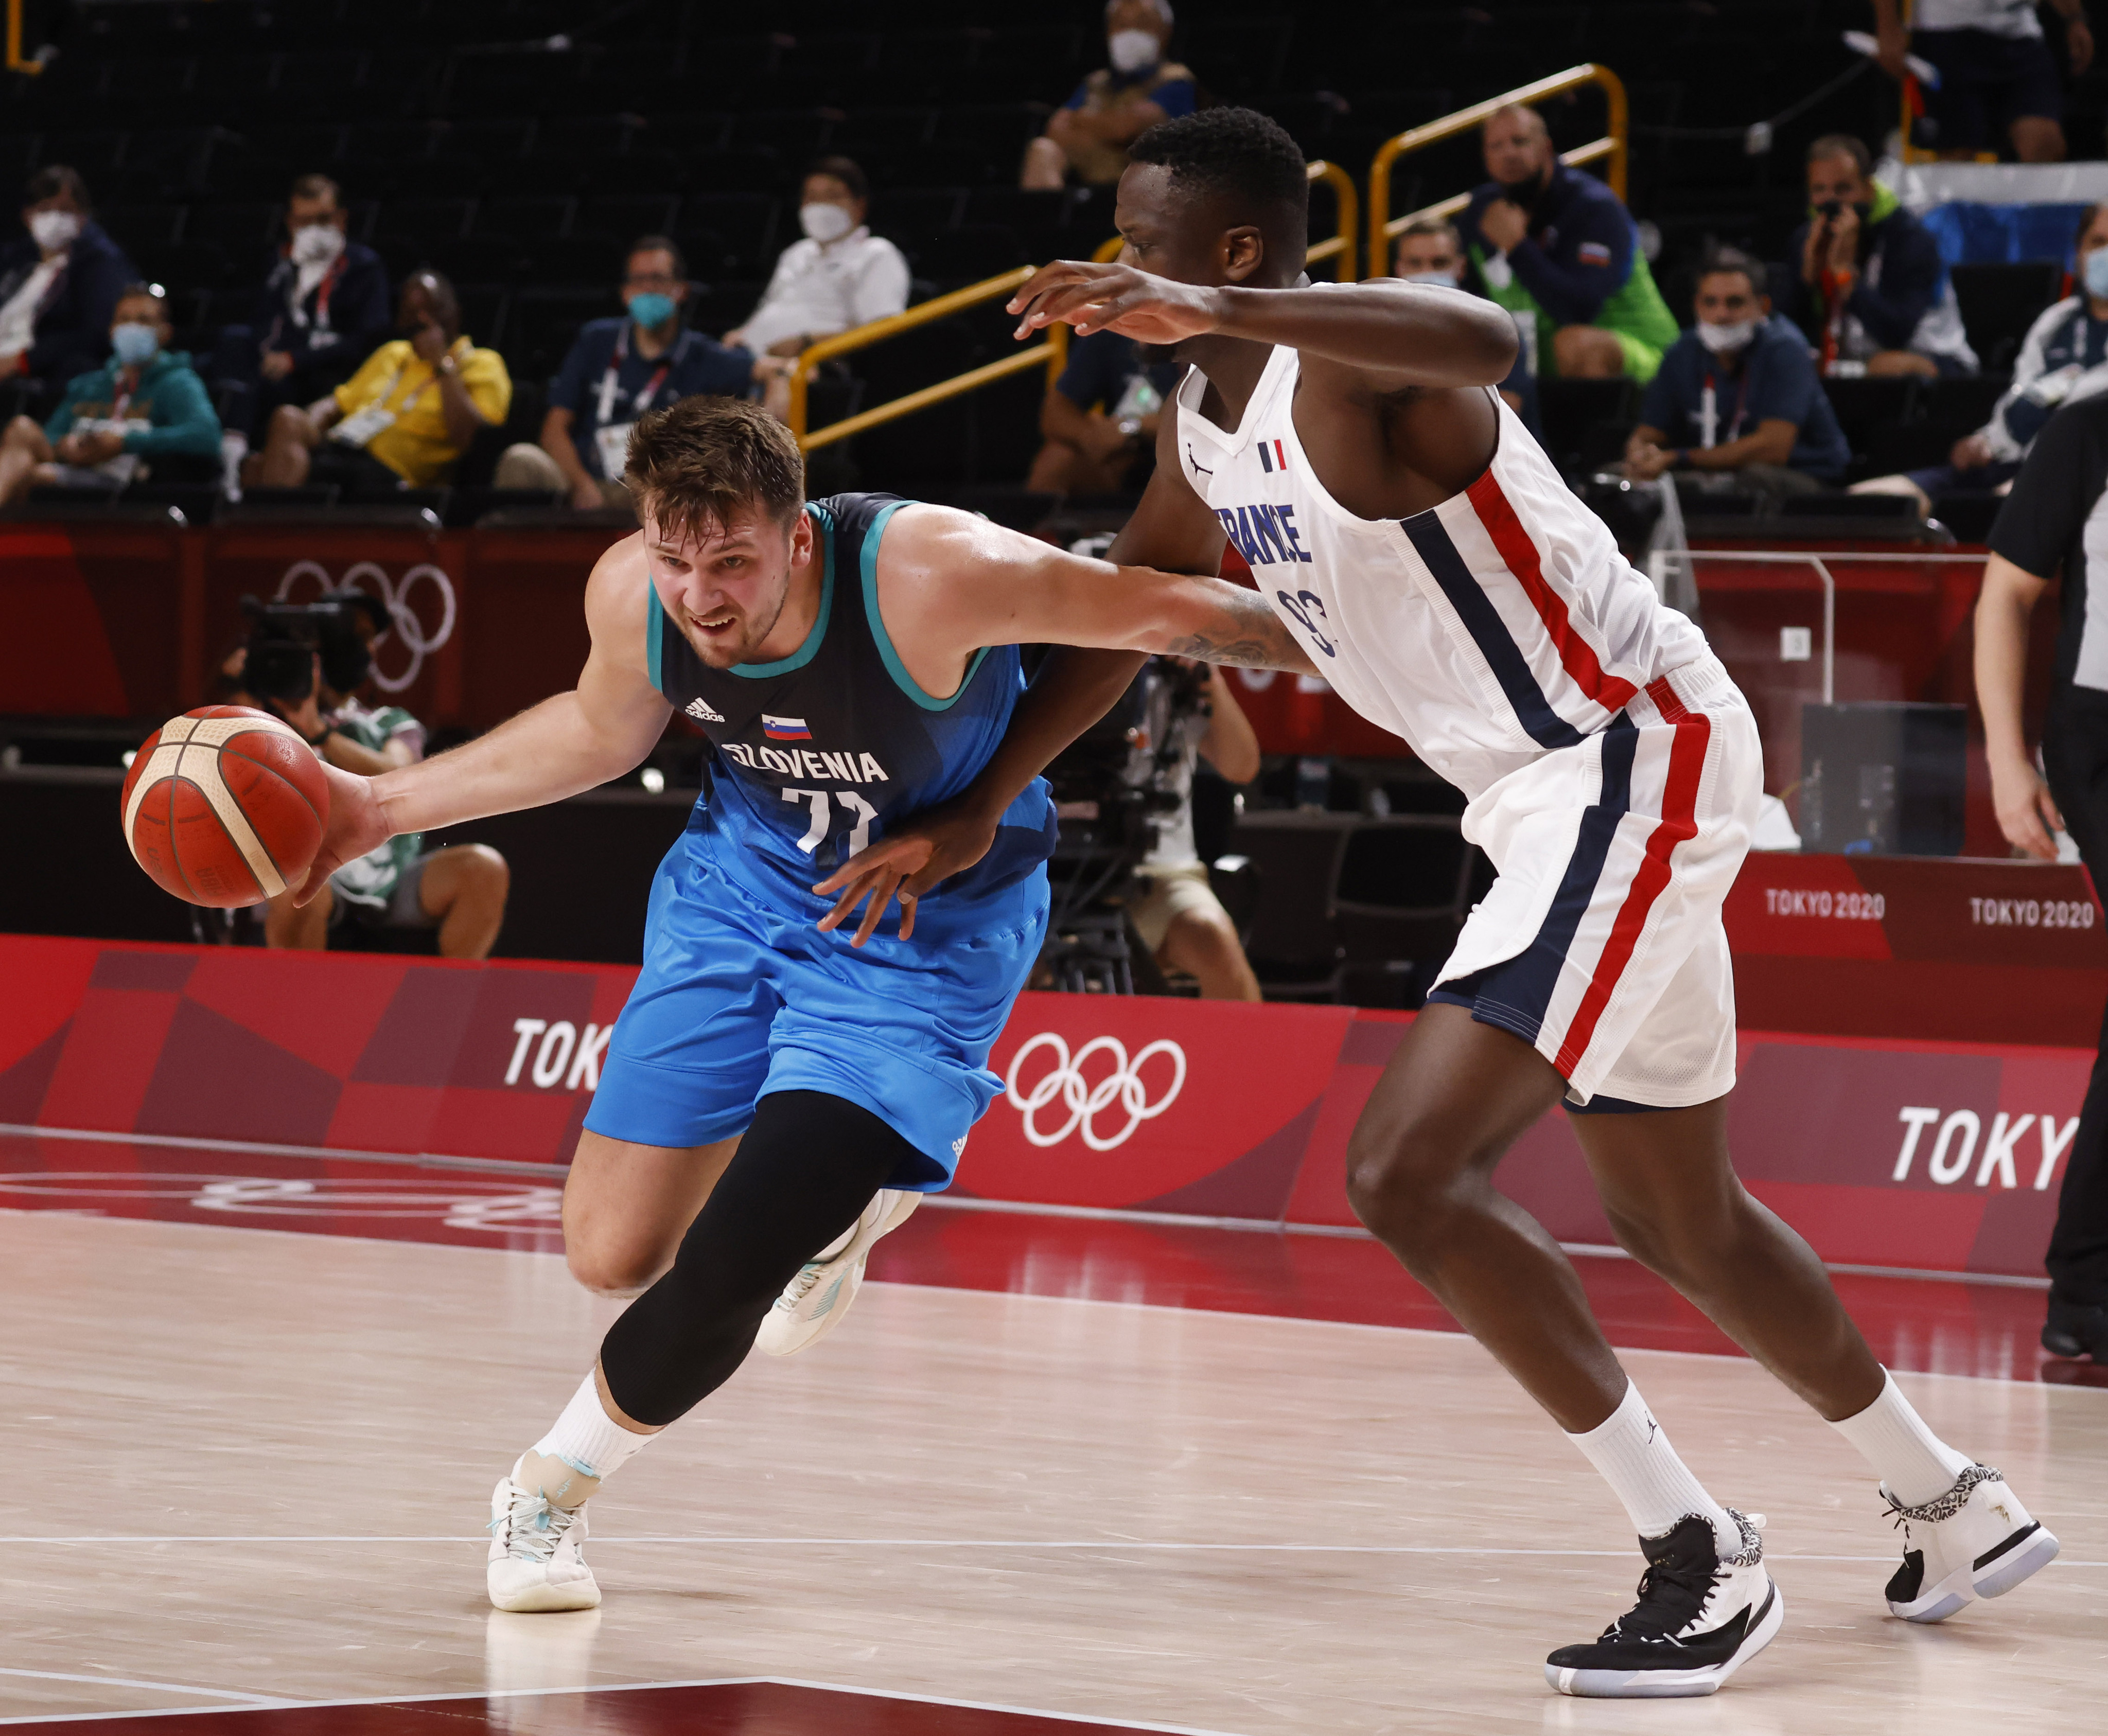 Slovenia teammate Goran Dragic's wild Luka Doncic take will scare the rest  of the NBA